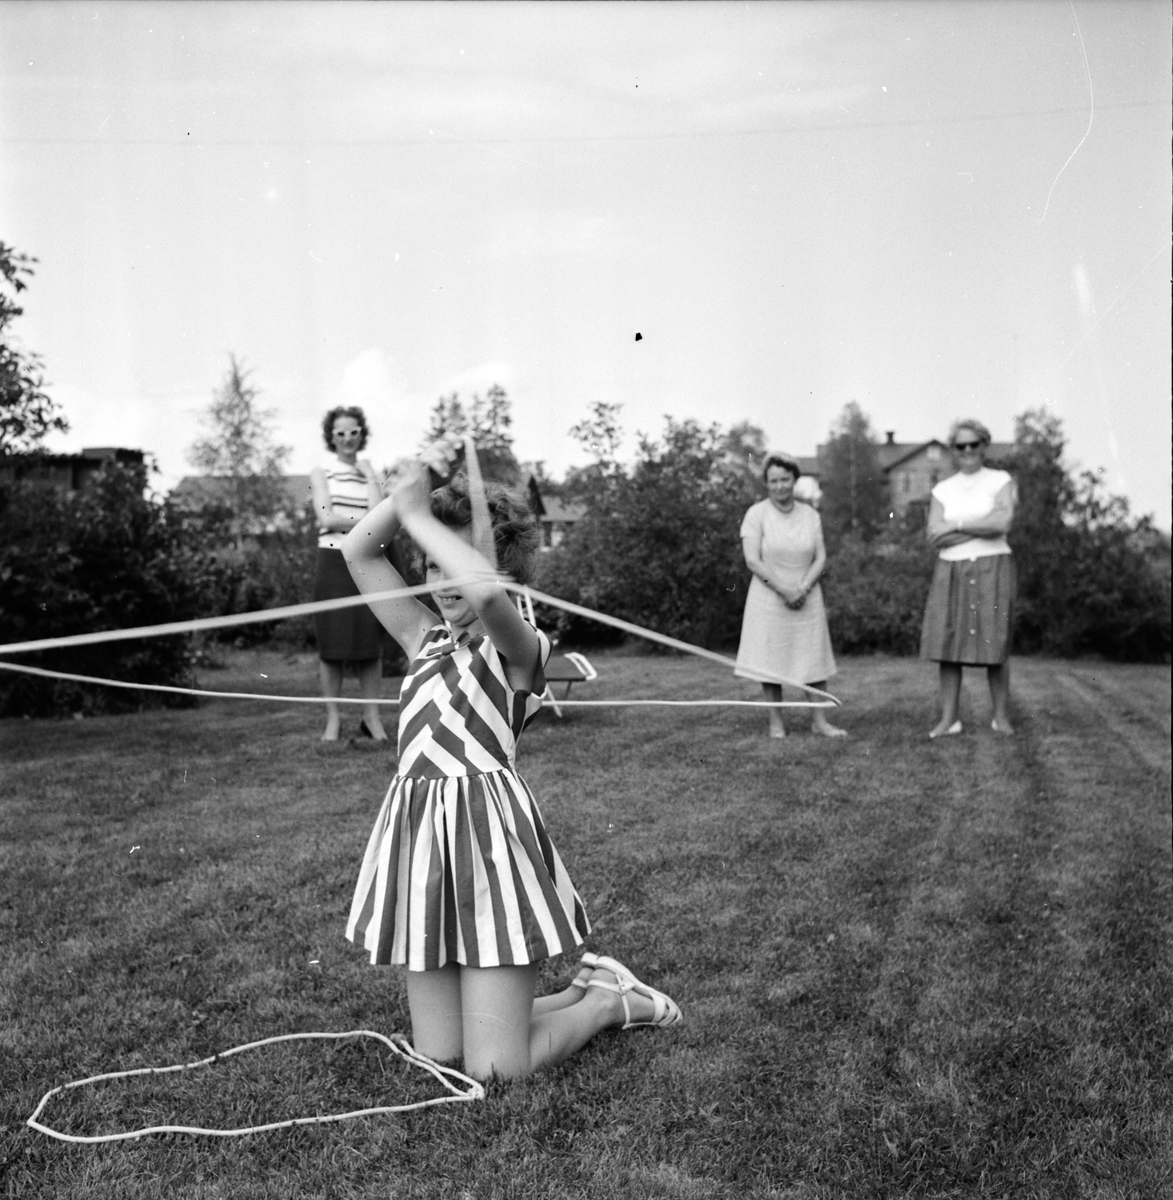 Wasabarn fr. USA,
Mrs Eva Rae Briscoe, Portland Oreg,
Anna & Ruben Haglund Södertälje,
9 Augusti 1964